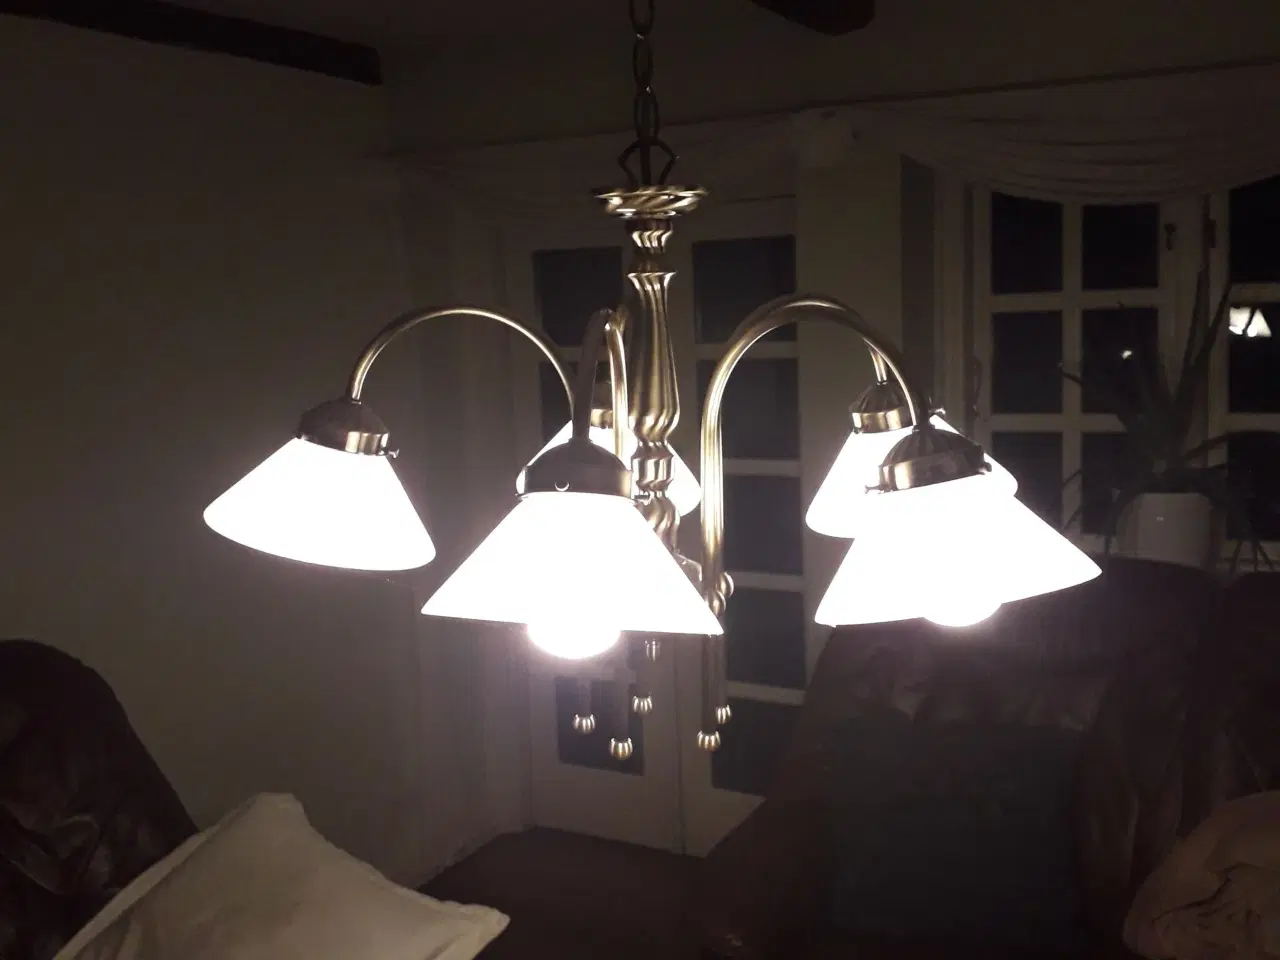 Billede 1 - Stue lampe 